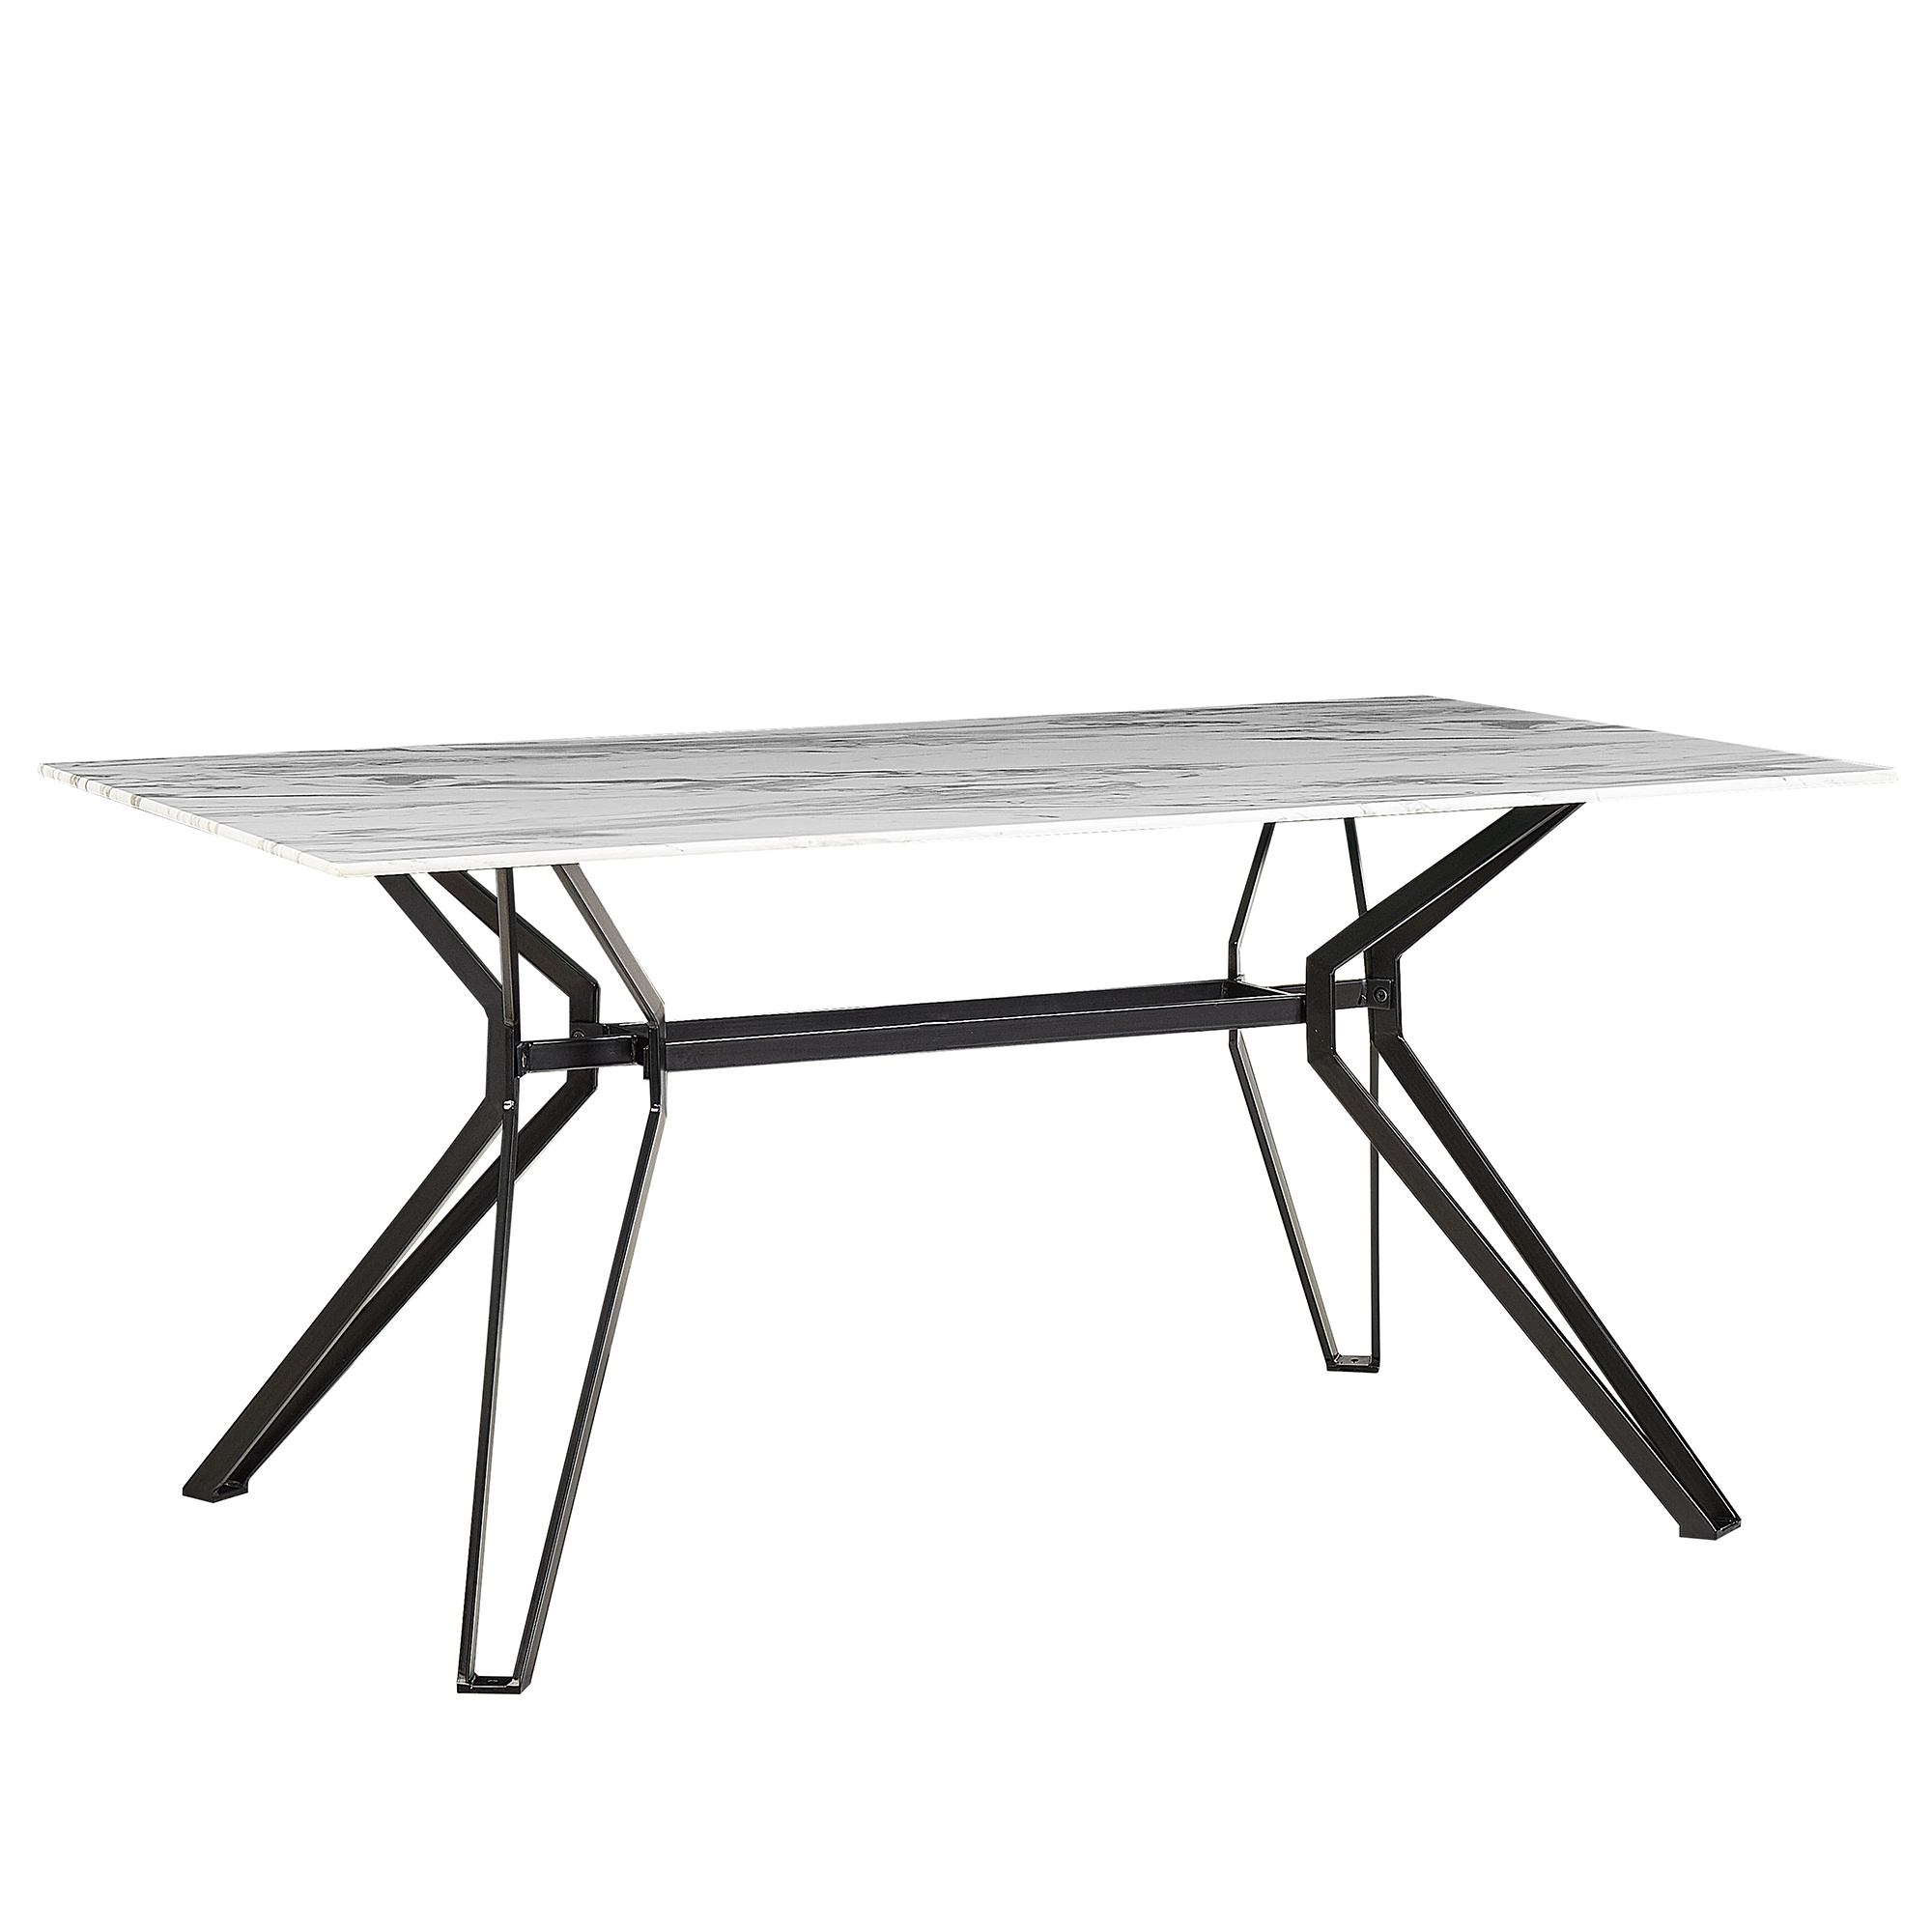 Beliani Dining Table Marble Effect Veneer Black Metal Legs Tempered Glass Top Rectangular 160 x 90 cm Modern Design